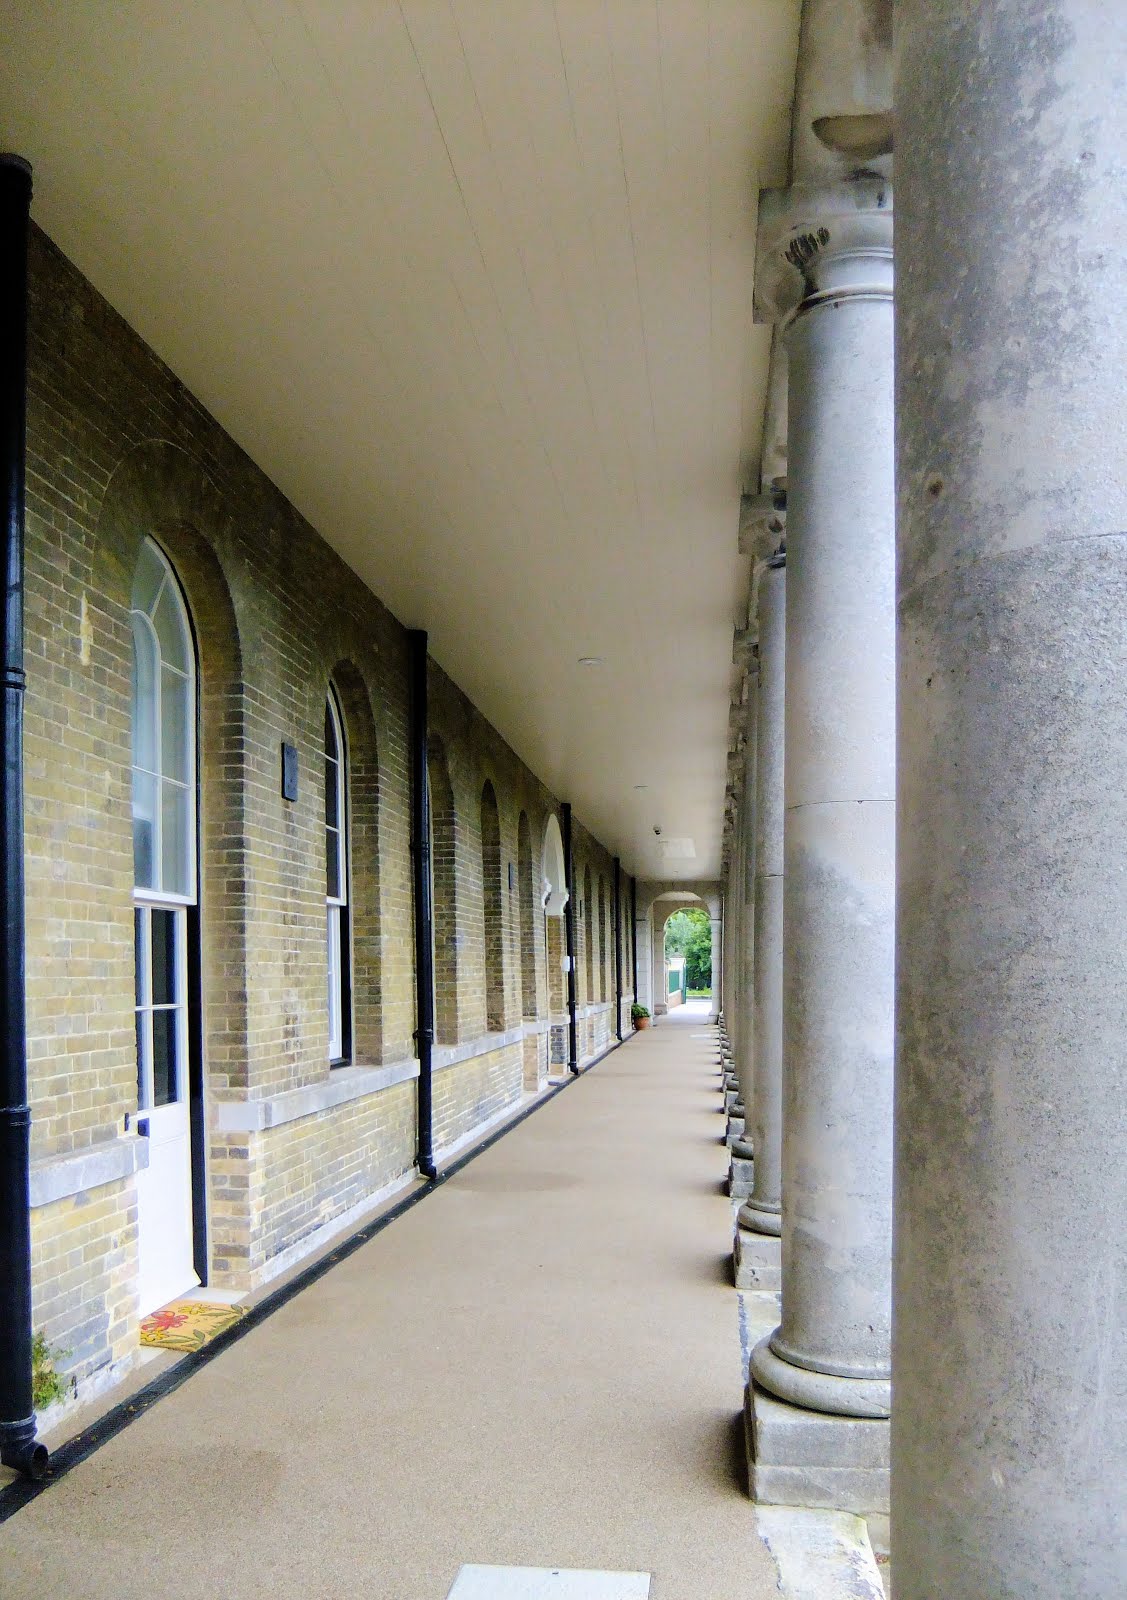 Restored colonnades